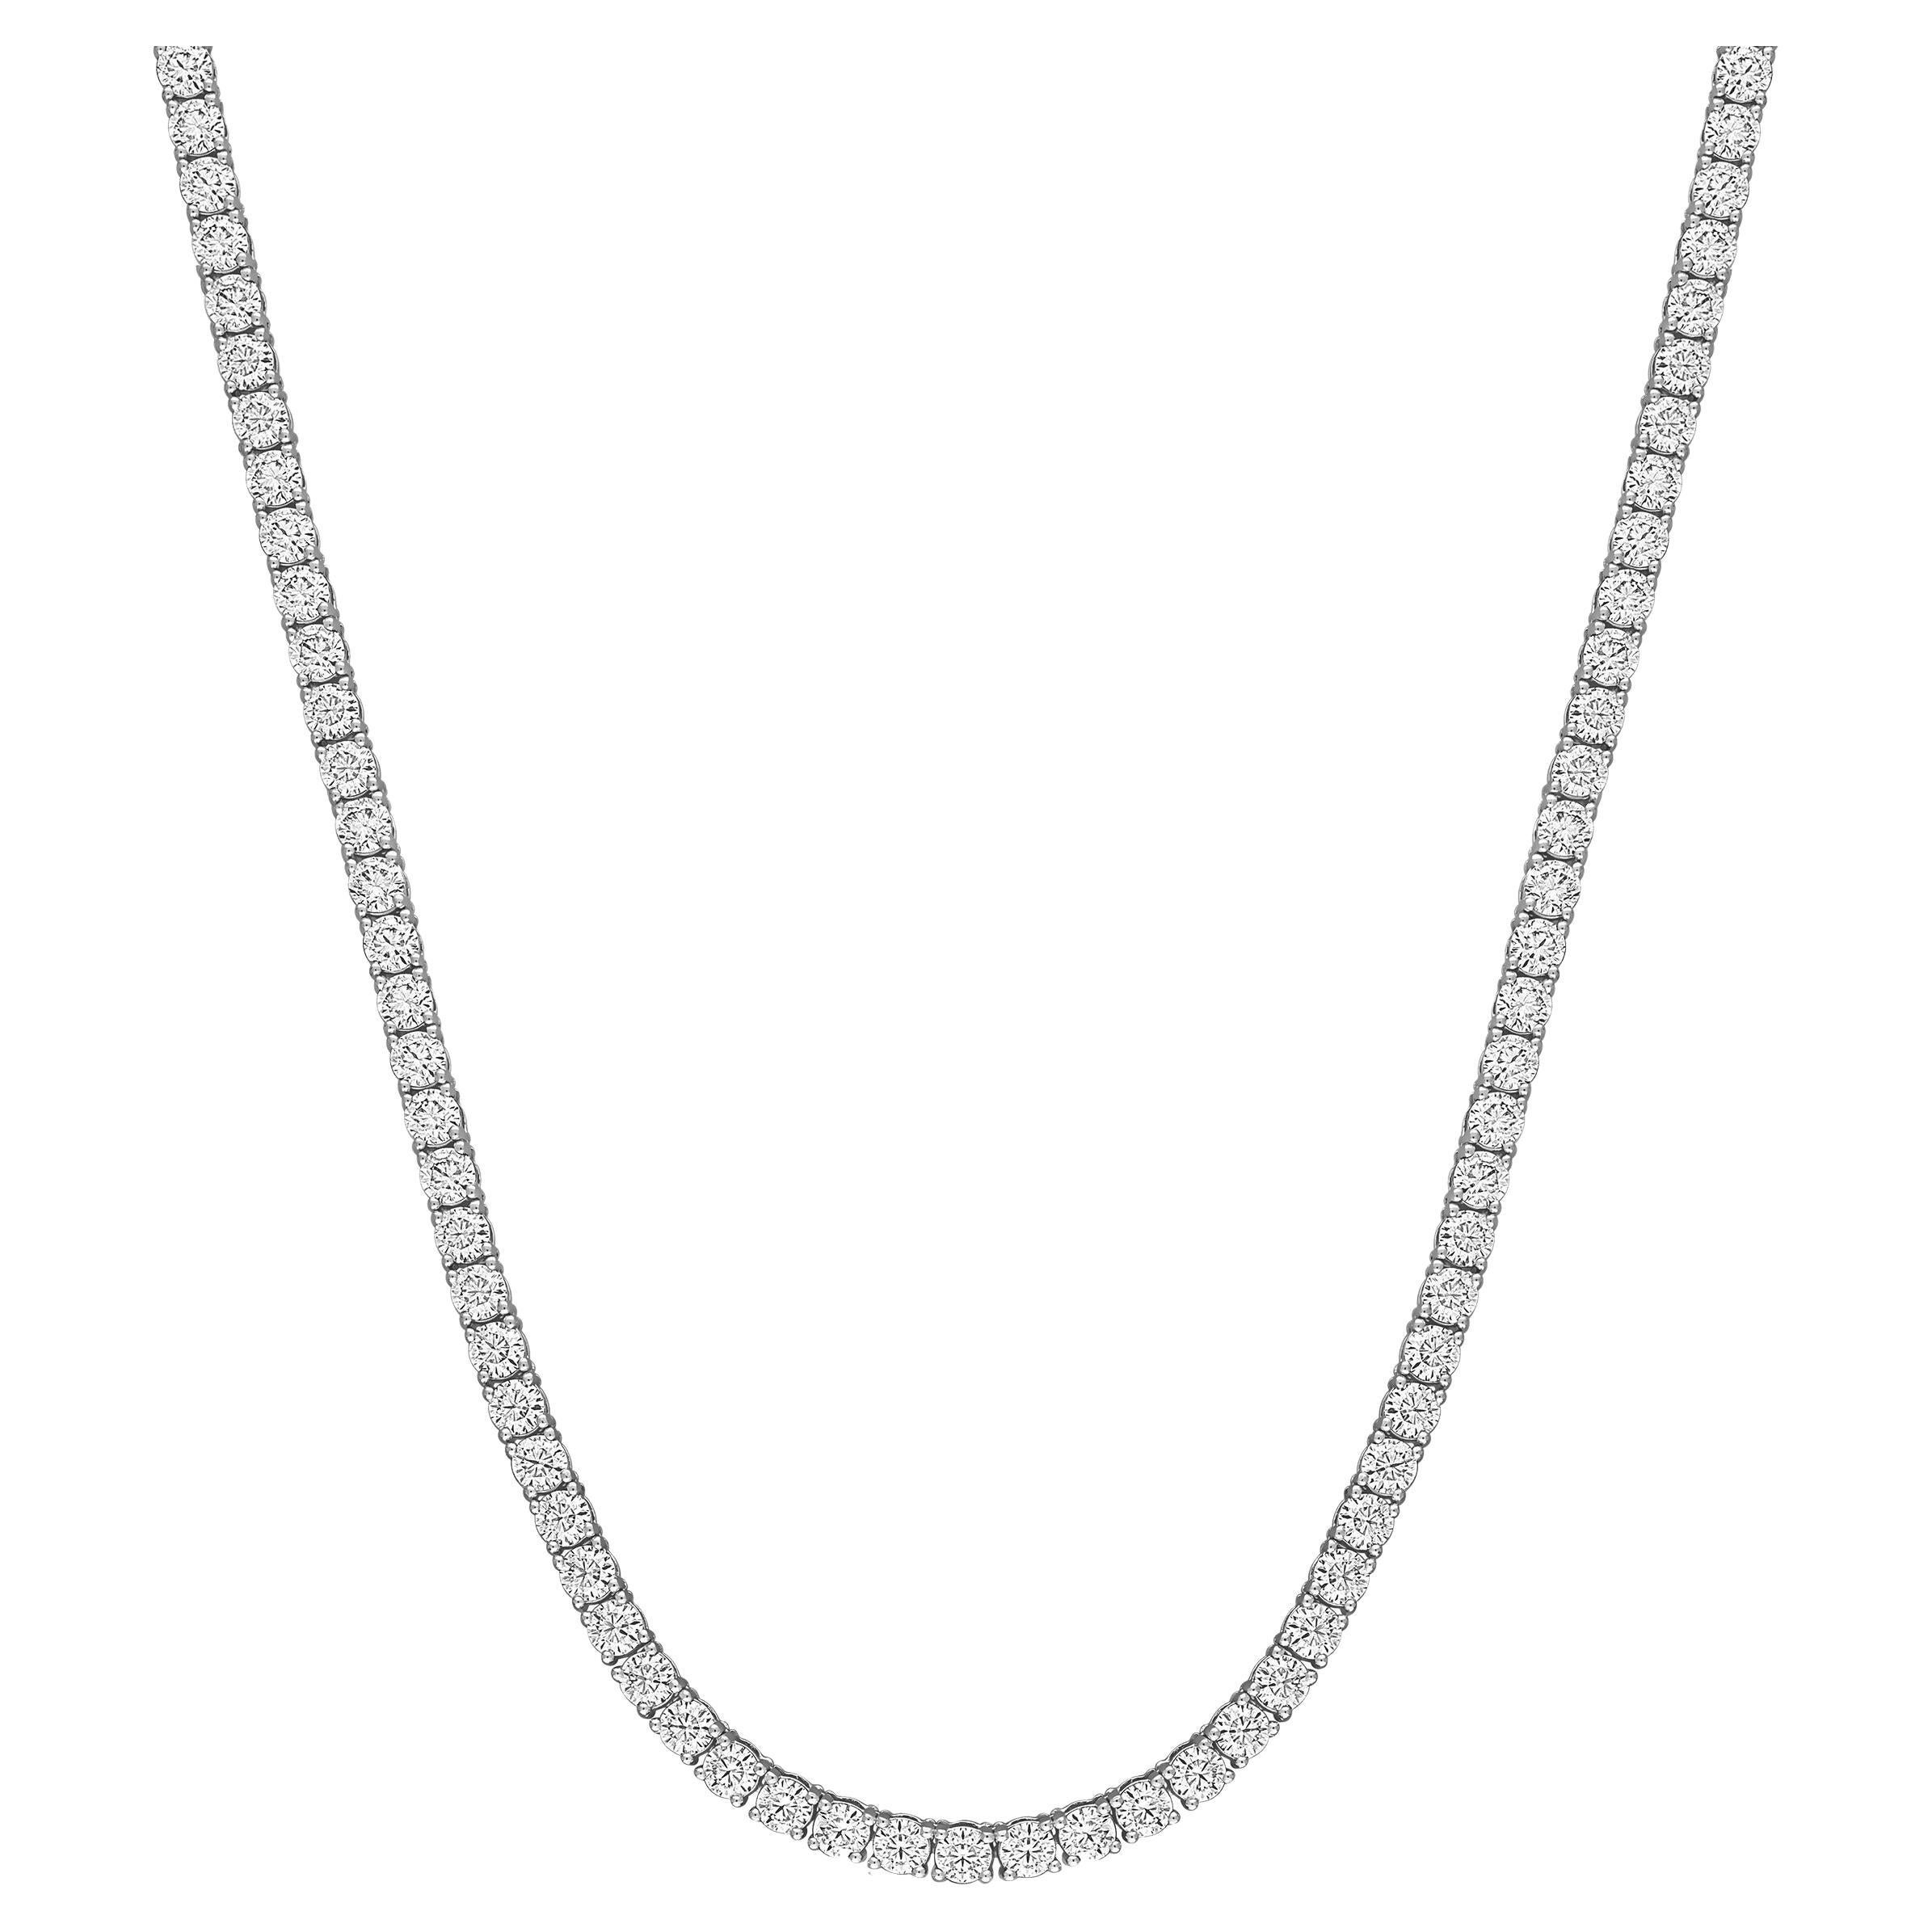 20.10 Carat Diamond Tennis Necklace in 14K White Gold